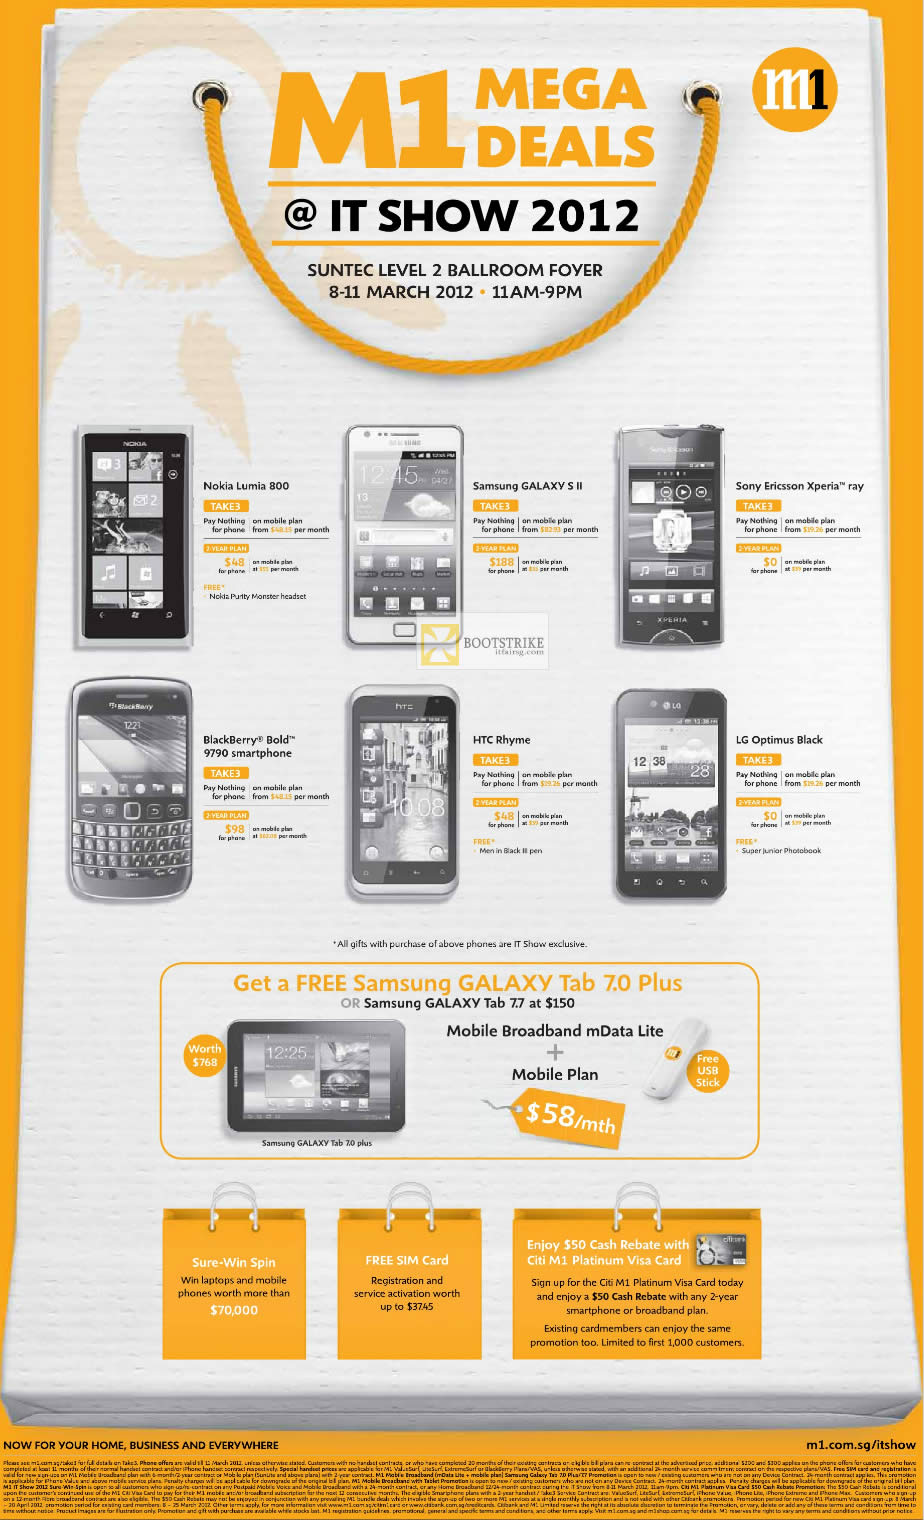 IT SHOW 2012 price list image brochure of M1 Nokia Lumia 800, Samsung Galaxy S II, Tab 7.0 Plus, Tab 7.7, SE Xperia Ray, Blackberry Bold 9790, HTC Rhyme, LG Optimus Black